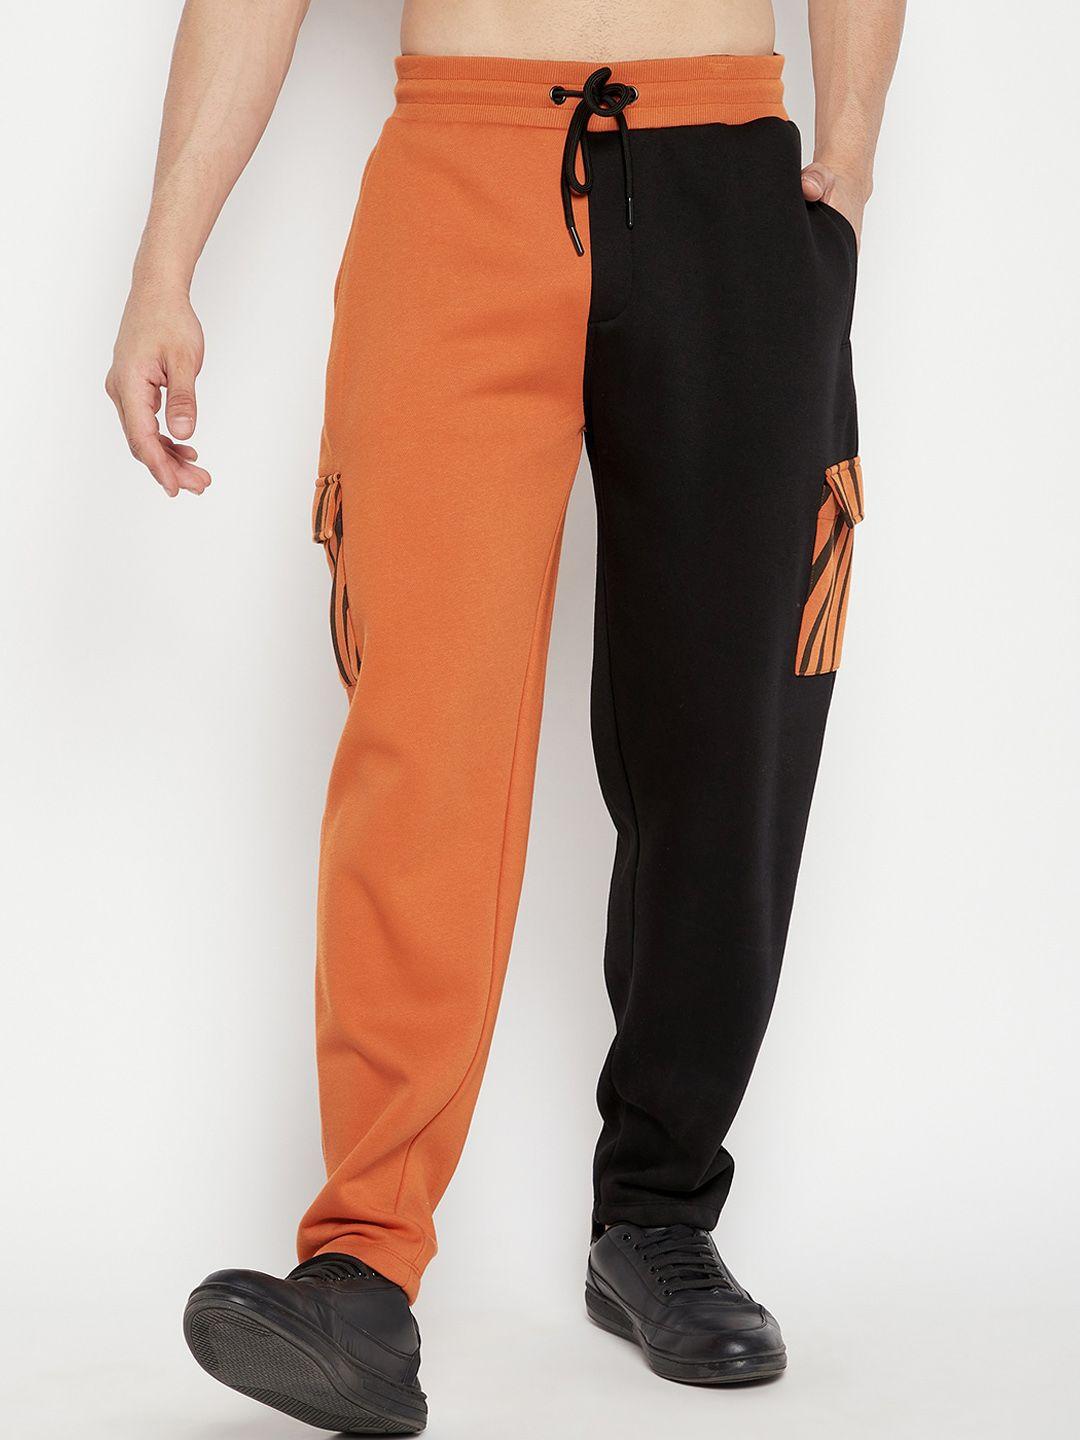 edrio-men-black-&-orange-colourblocked-cotton-track-pants